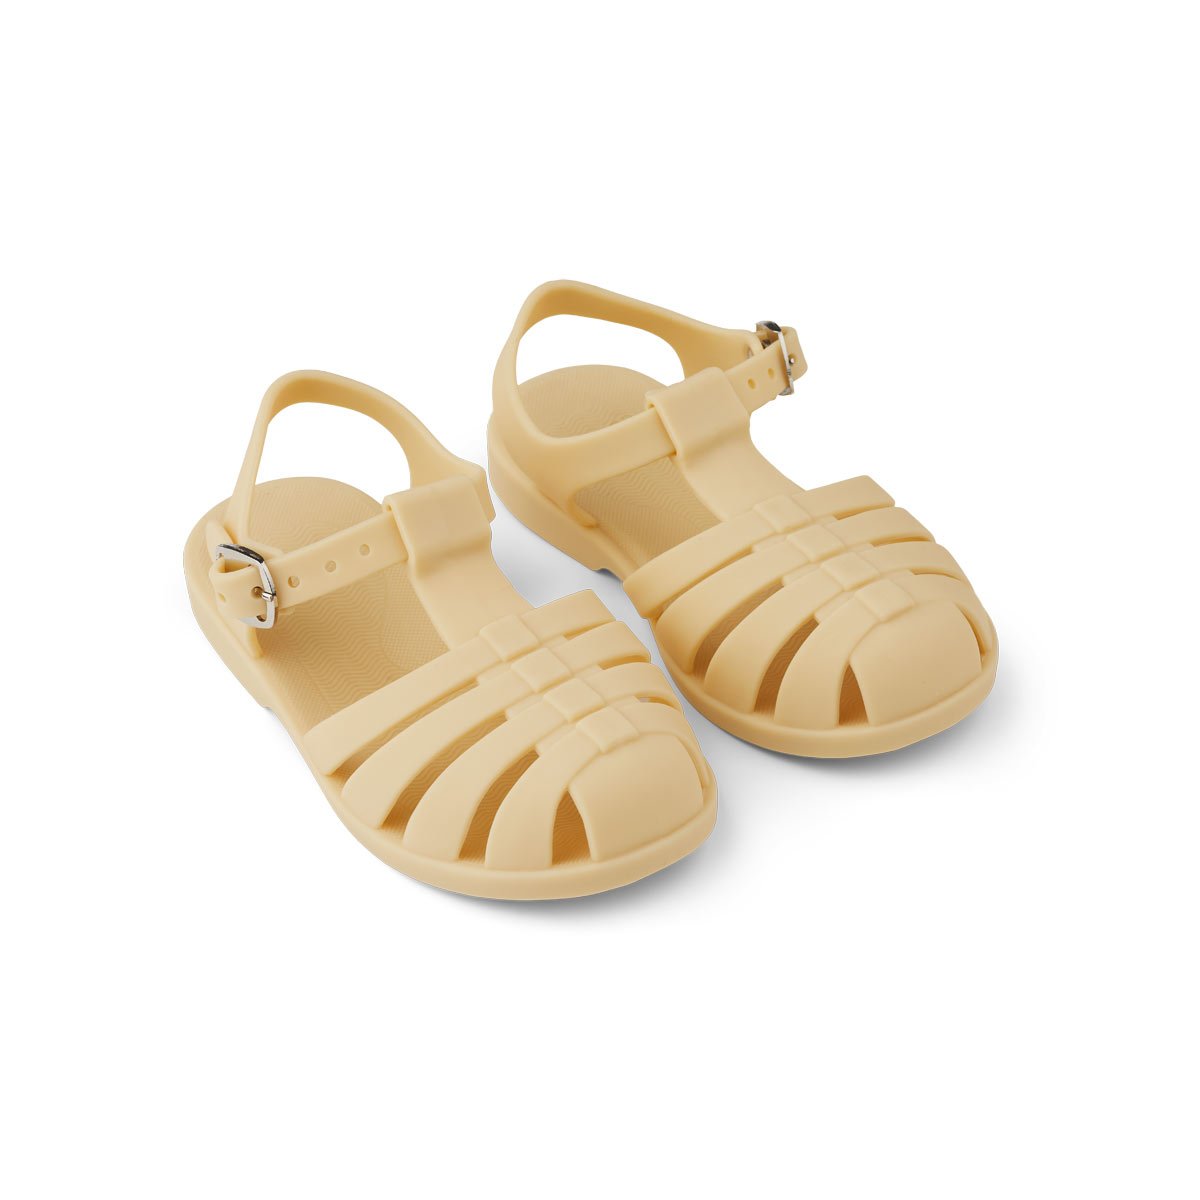 Bre Beach Sandals - wheat yellow